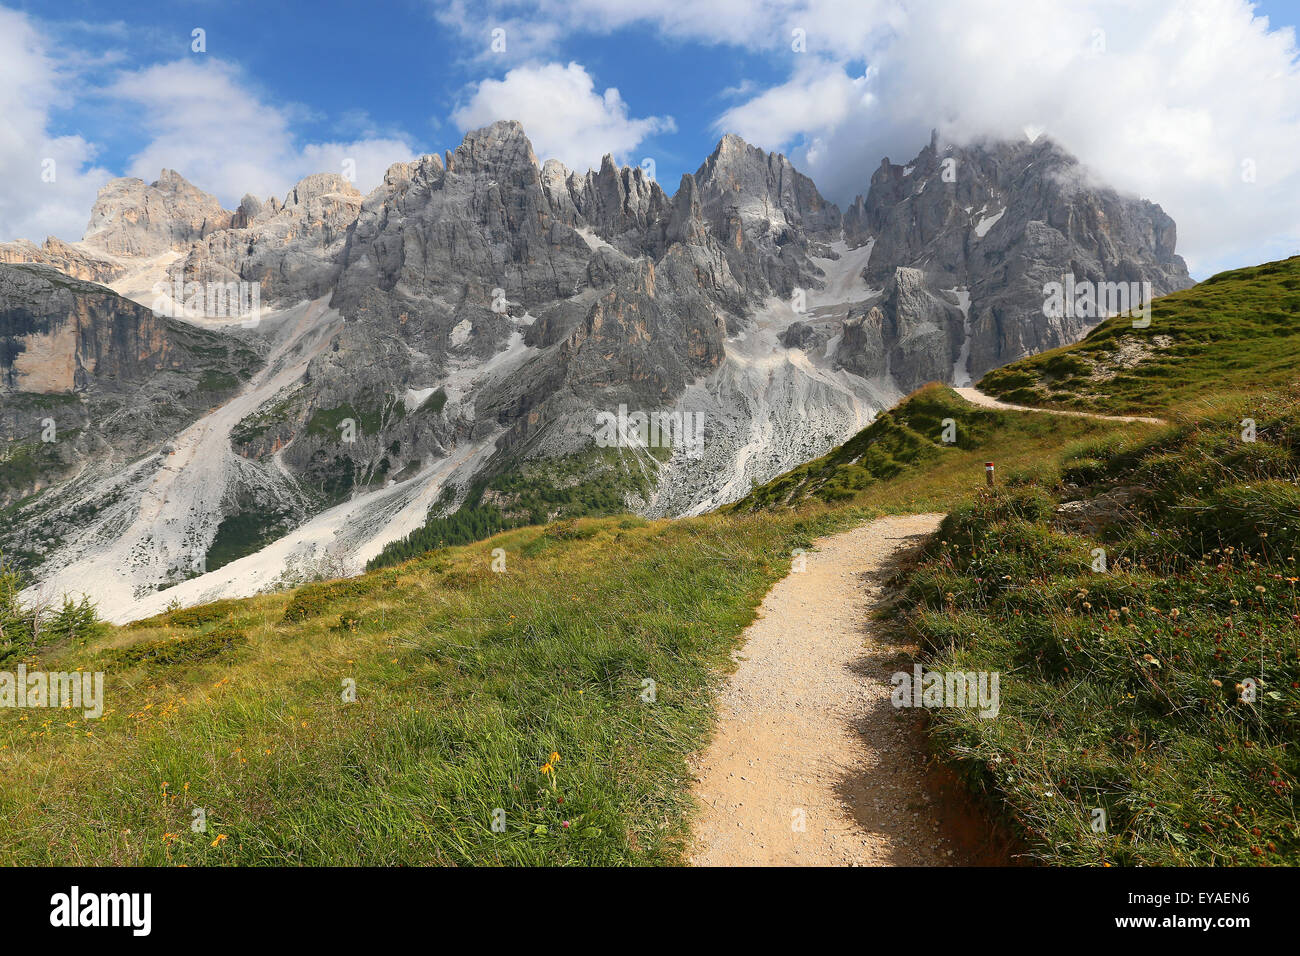 Hiking trail. The Pale di San Martino mountain group. Cimon della Pala, Cima Vezzana, Bureloni peaks. The Trentino Dolomites. Italian Alps. Europe. Stock Photo